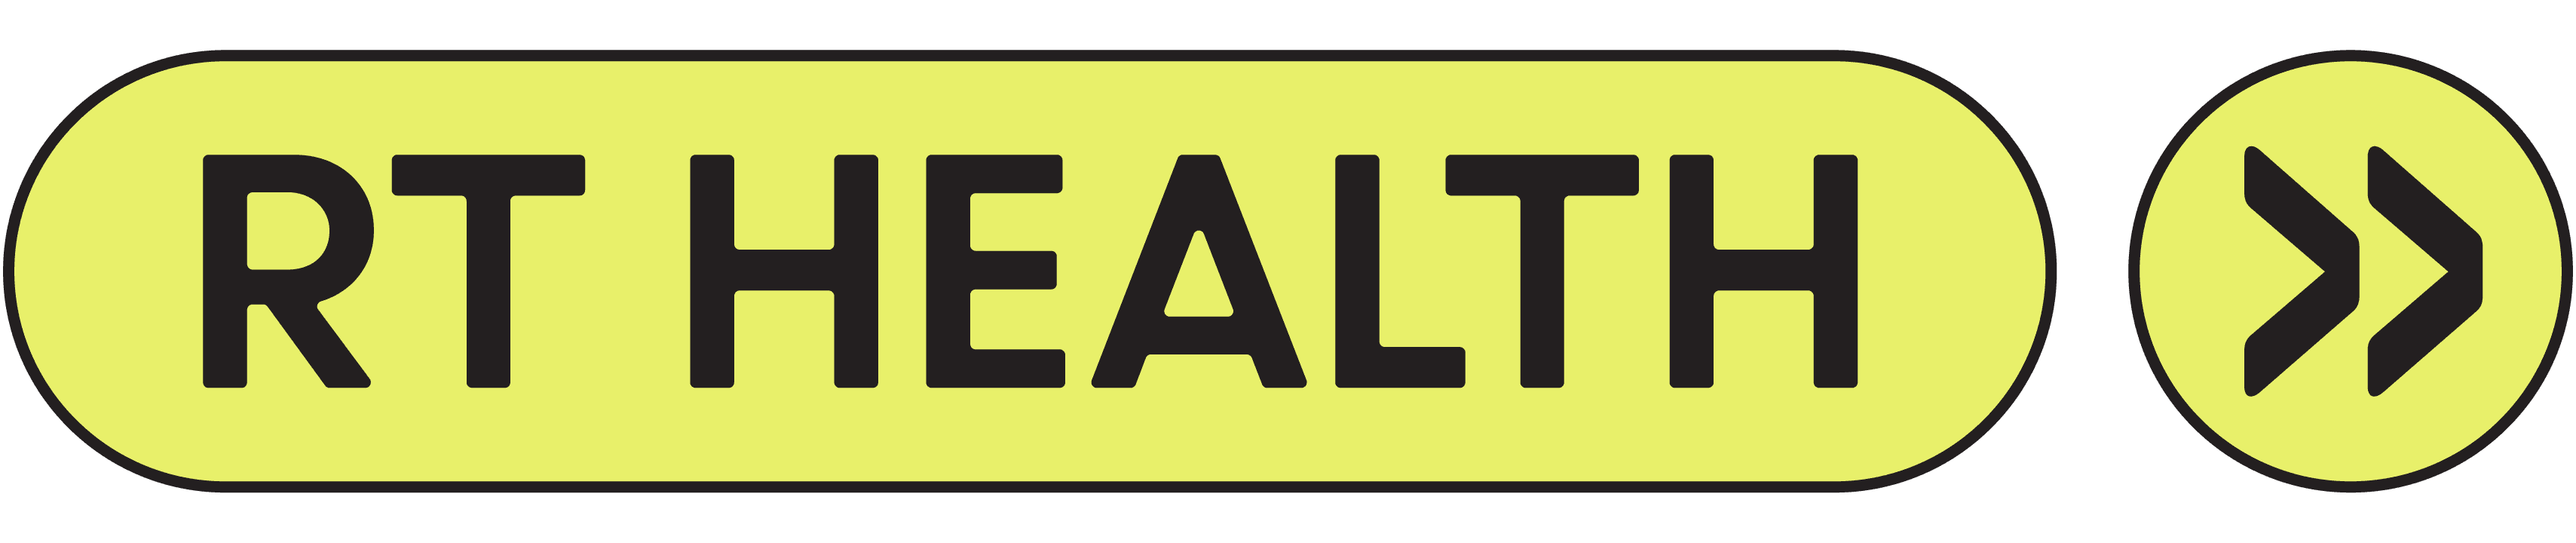 RT health